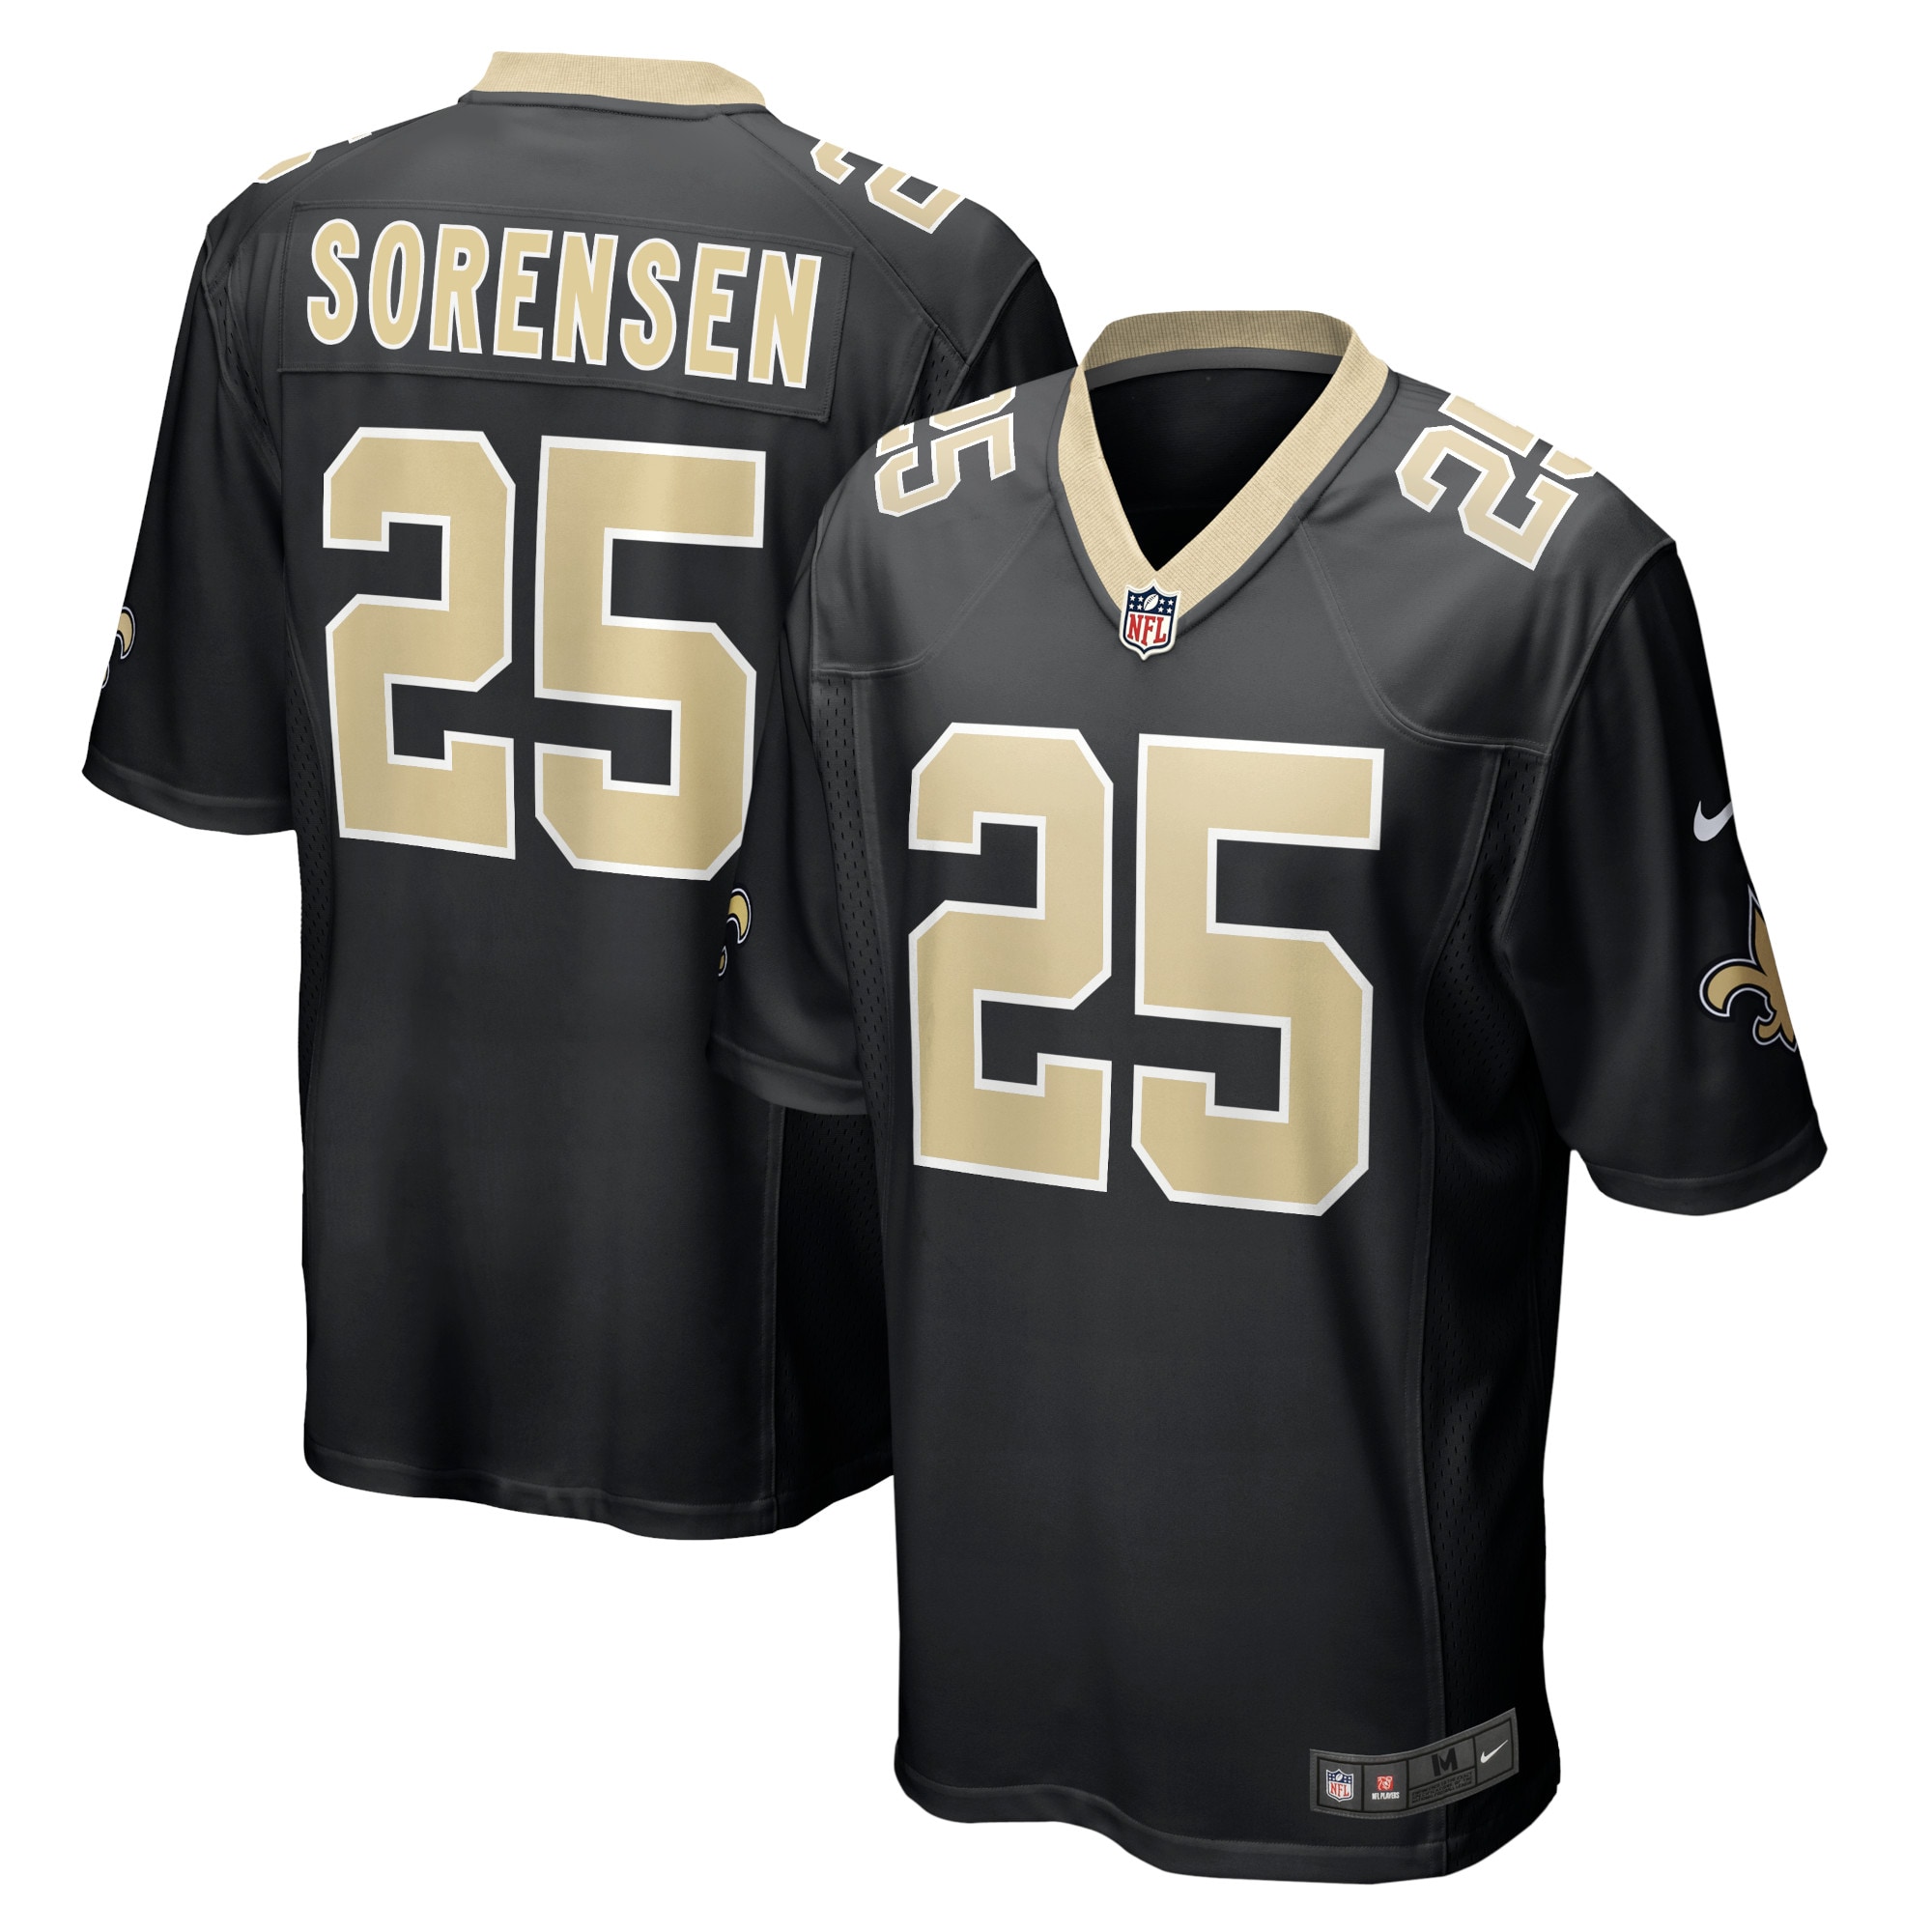 Men's New Orleans Saints Jerseys Black Daniel Sorensen Game Player Style